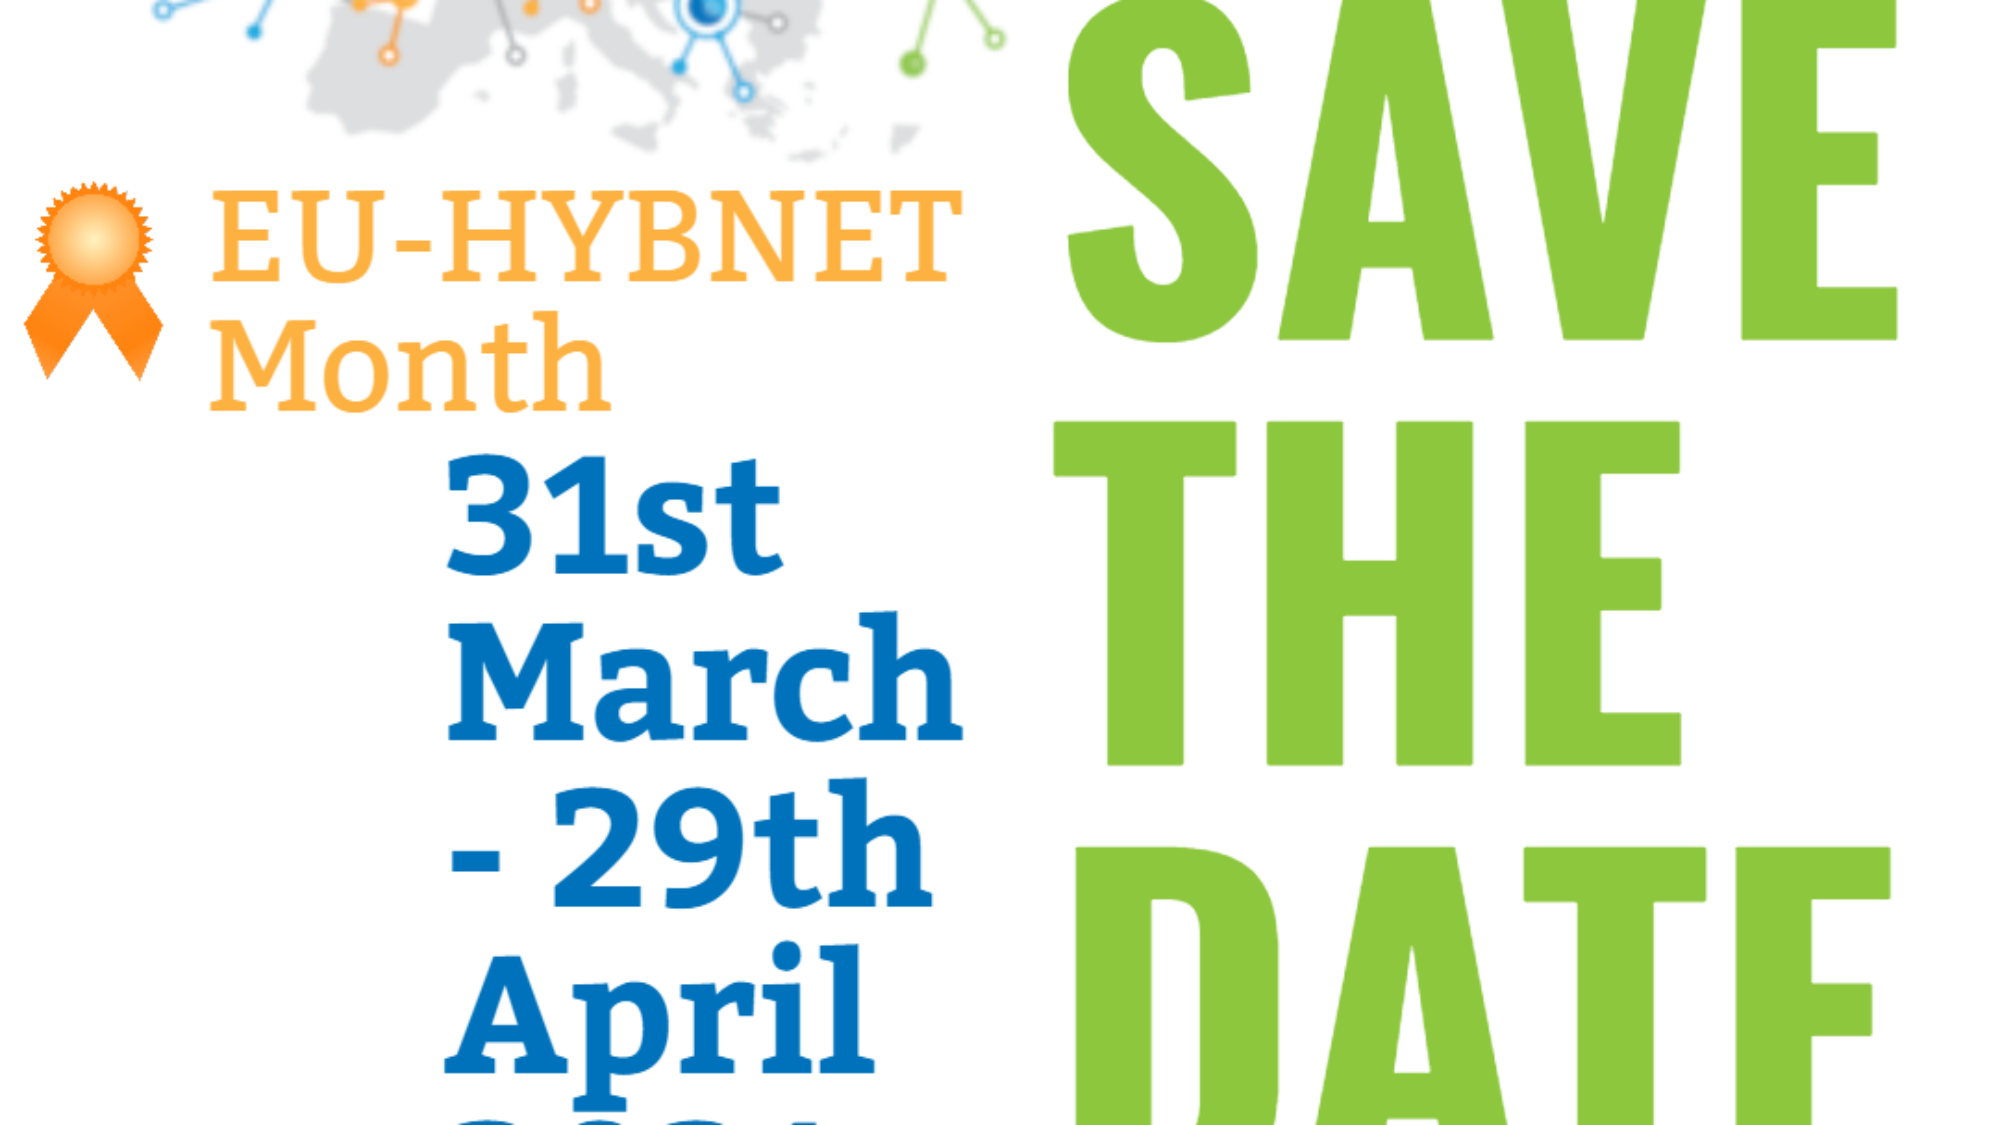 Save the date EU HYBNET Month